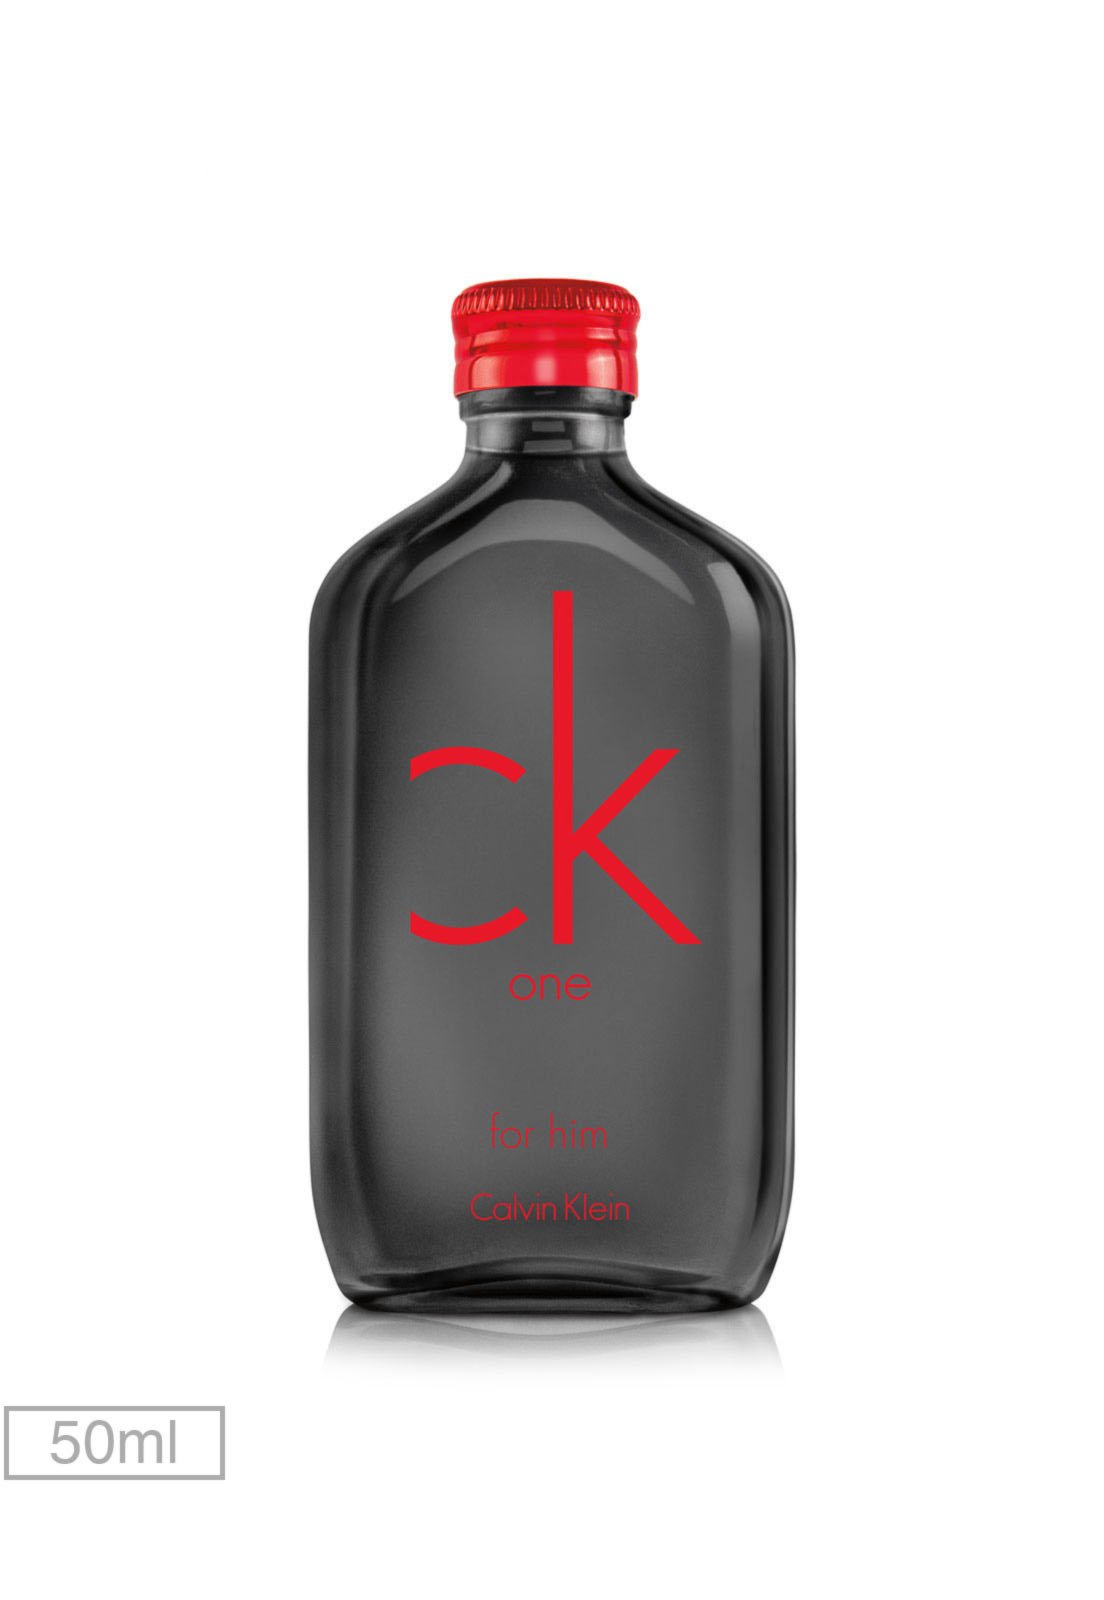 Perfume Ck One Red Edition For Him Calvin Klein 50ml - Compre Agora